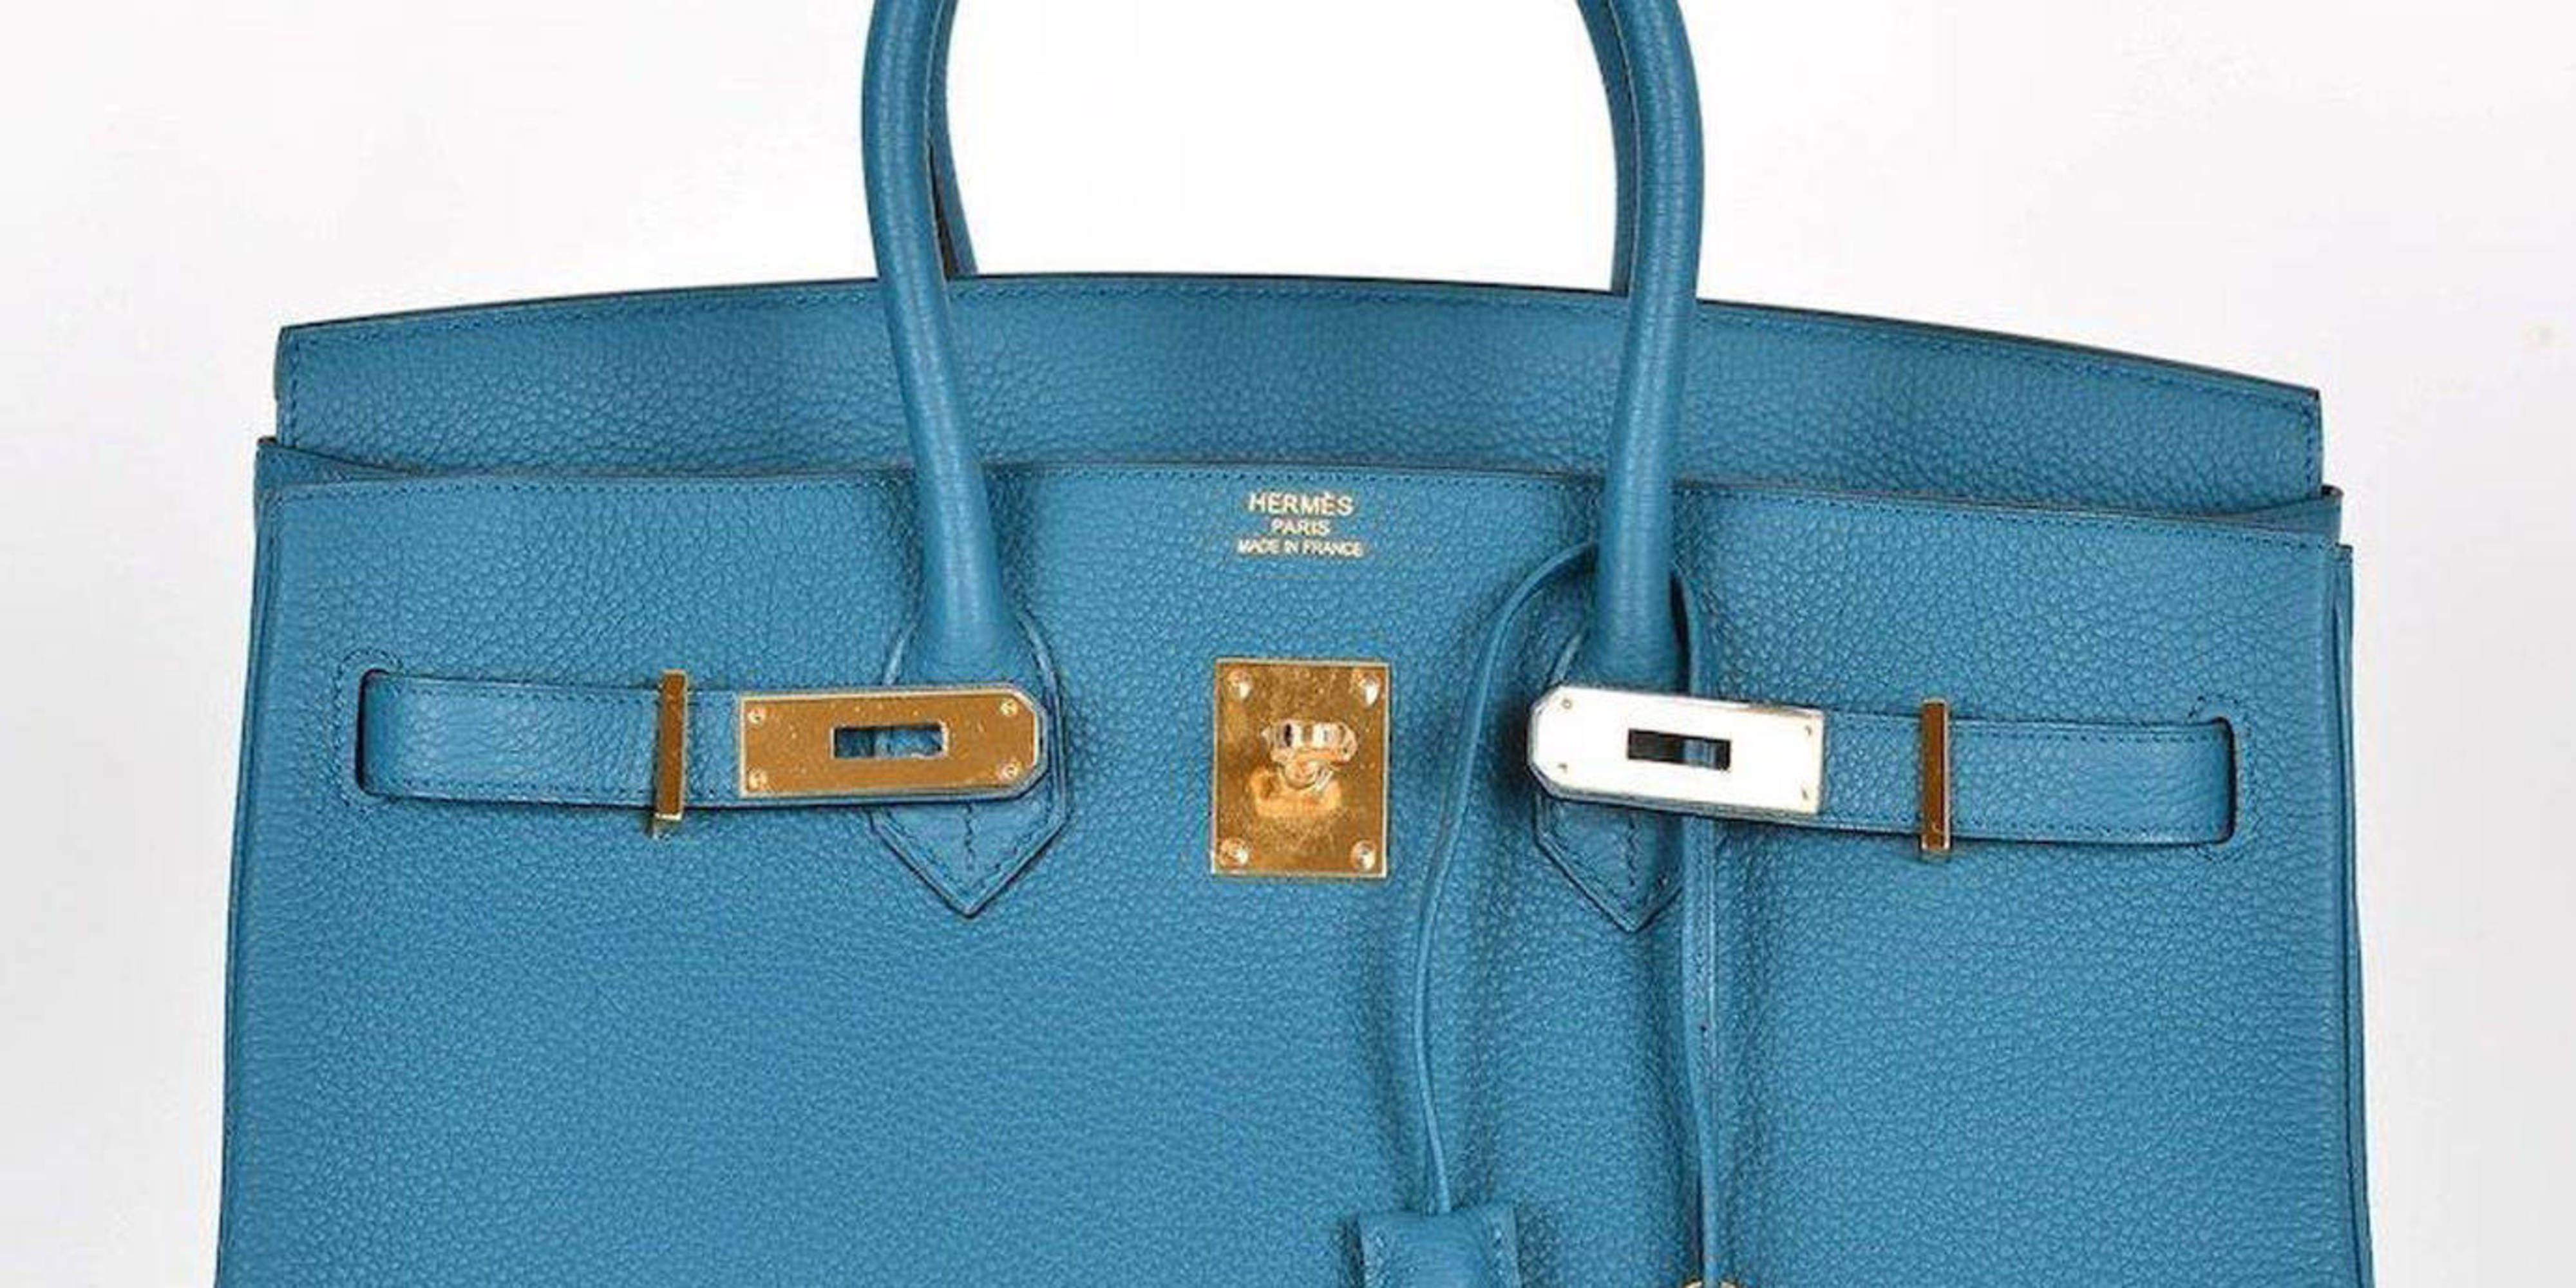 How To Spot A Fake Birkin Bag - Real 